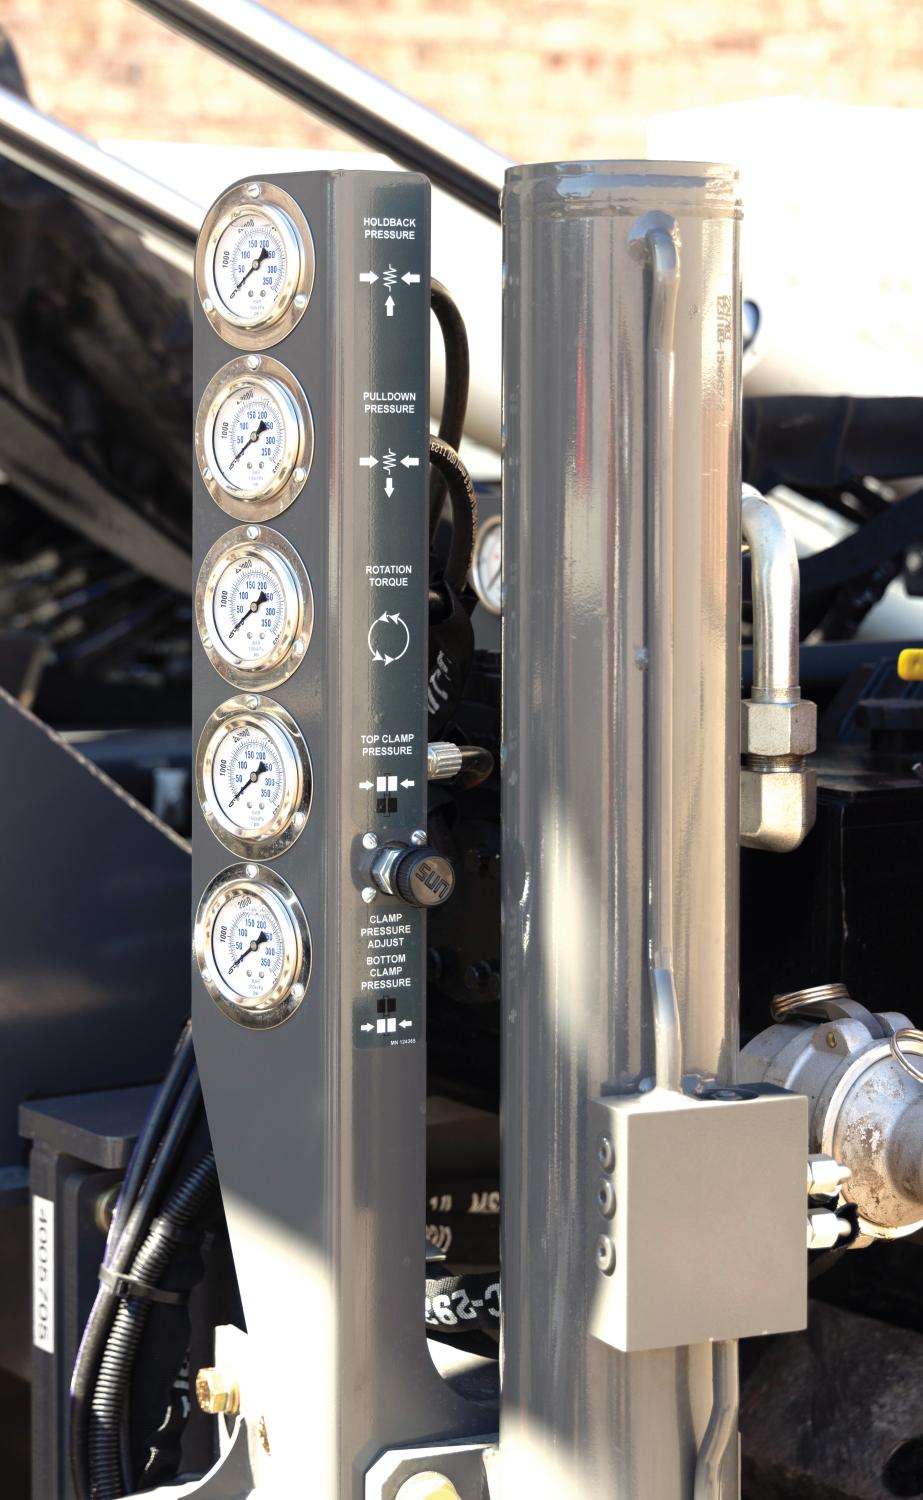 Five Analog Displays indicating holdback pressure, pulldown pressure, rotation torque, top clamp pressure, and bottom clamp pressure. 